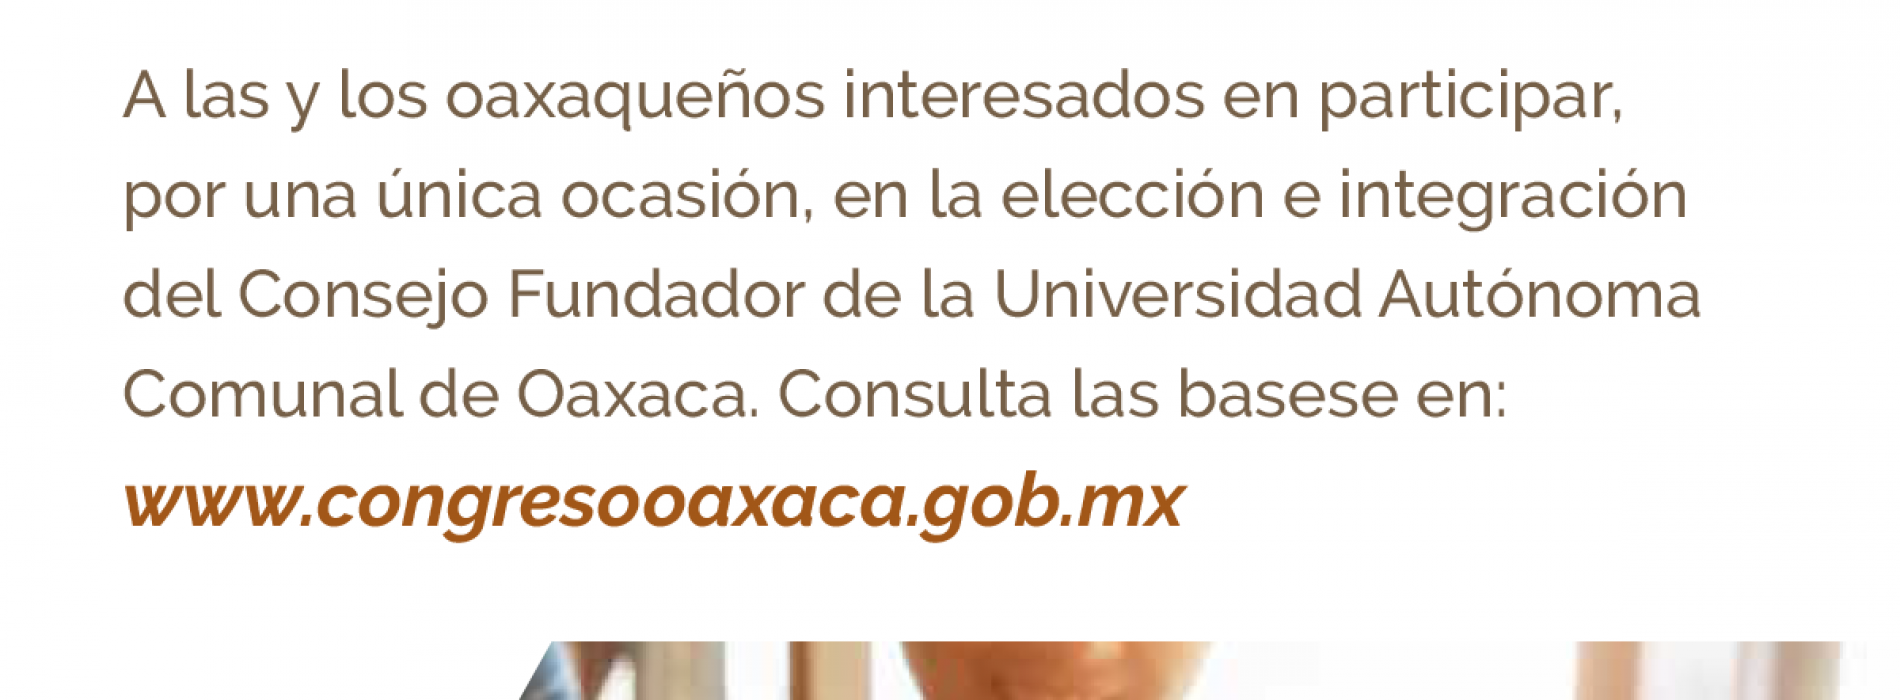 Convocan a integrar Consejo Fundador de la Universidad Autónoma Comunal de Oaxaca